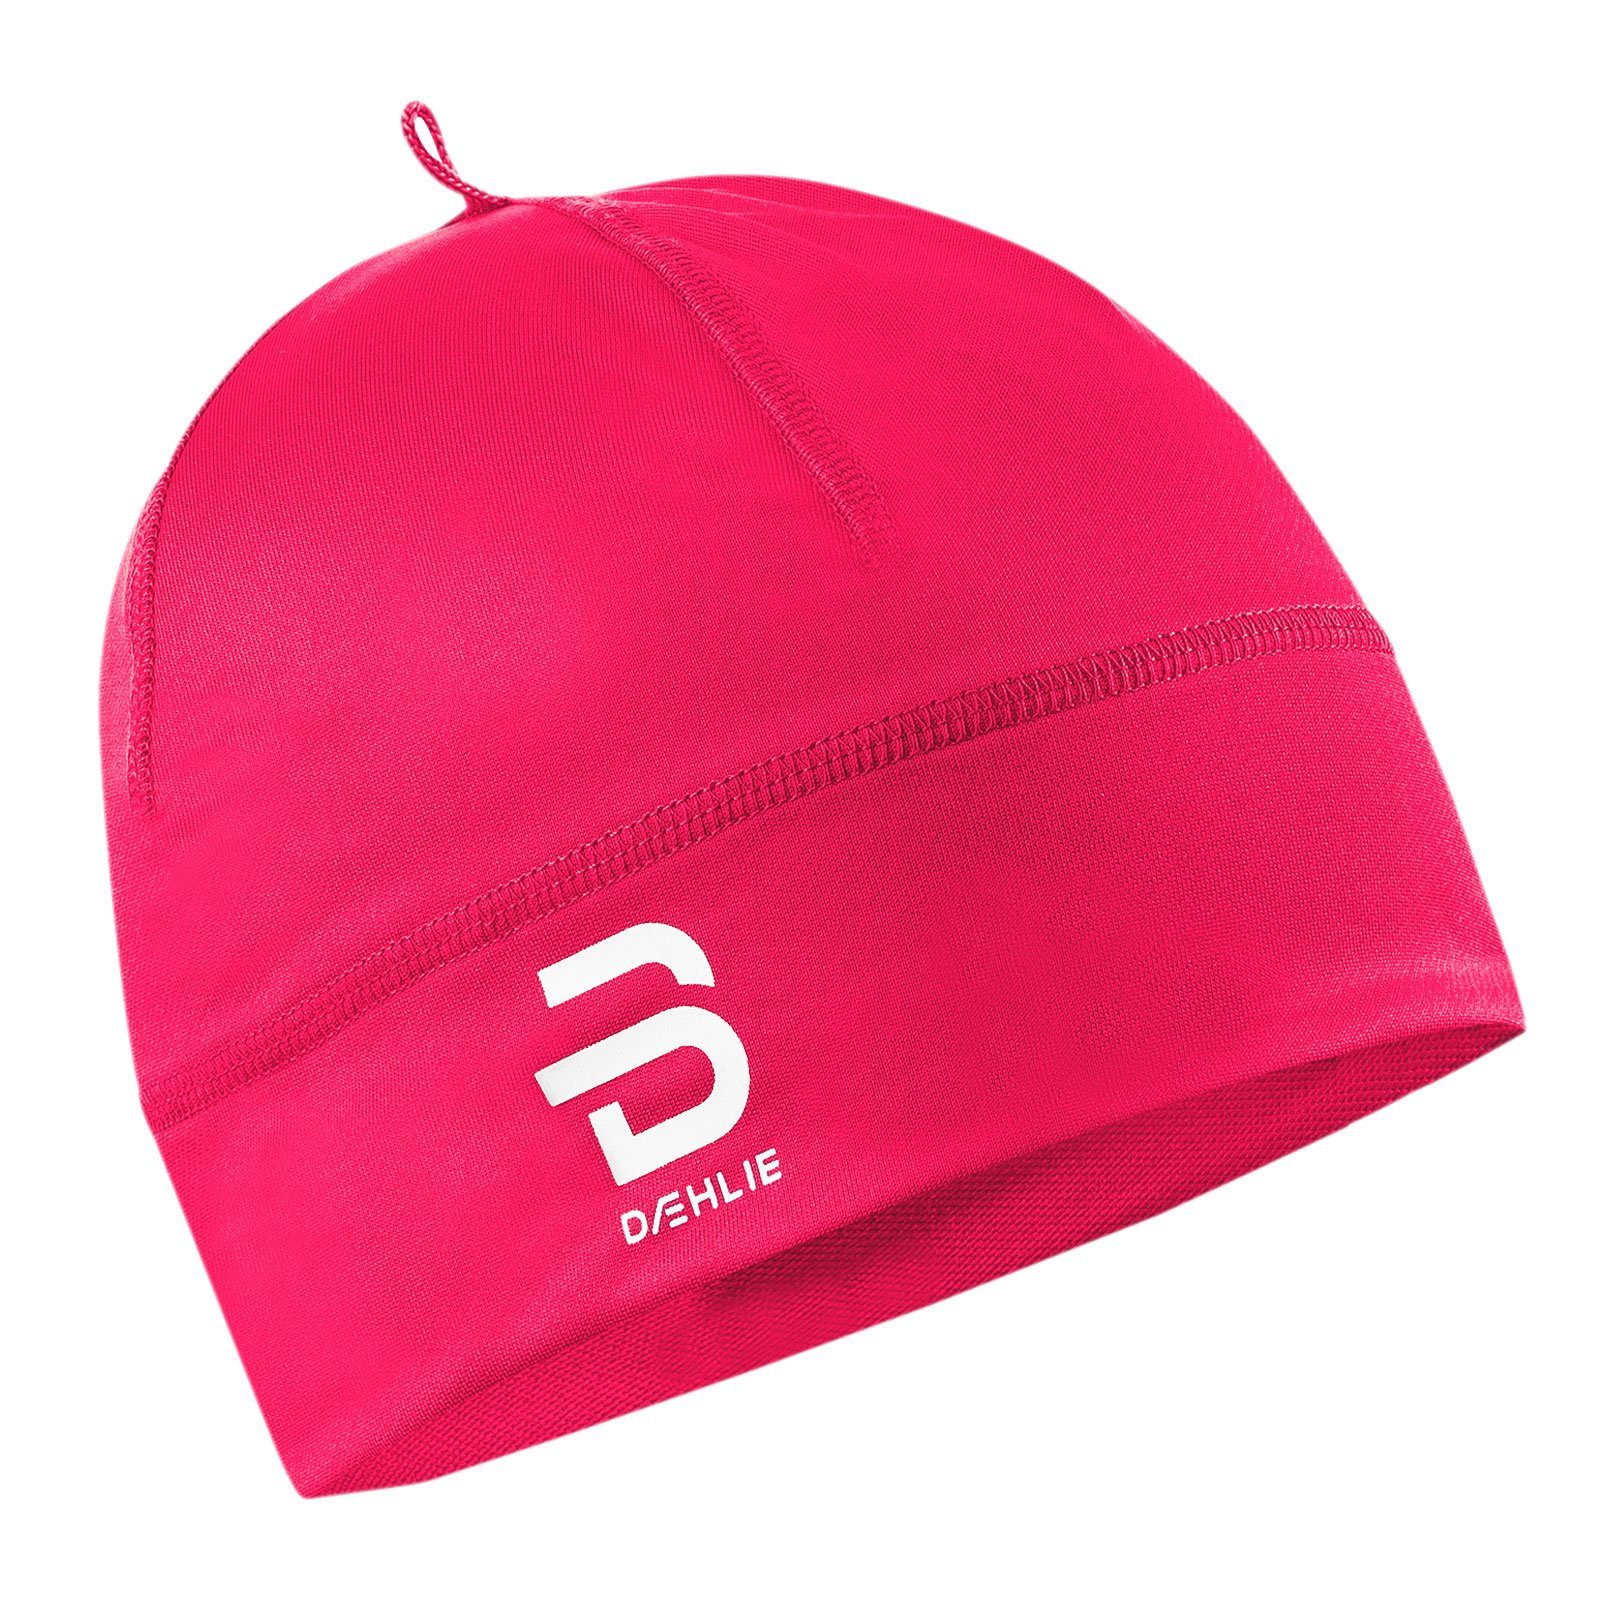 DAEHLIE Skimütze Hat Polyknit mit dekorativem Logo rosa